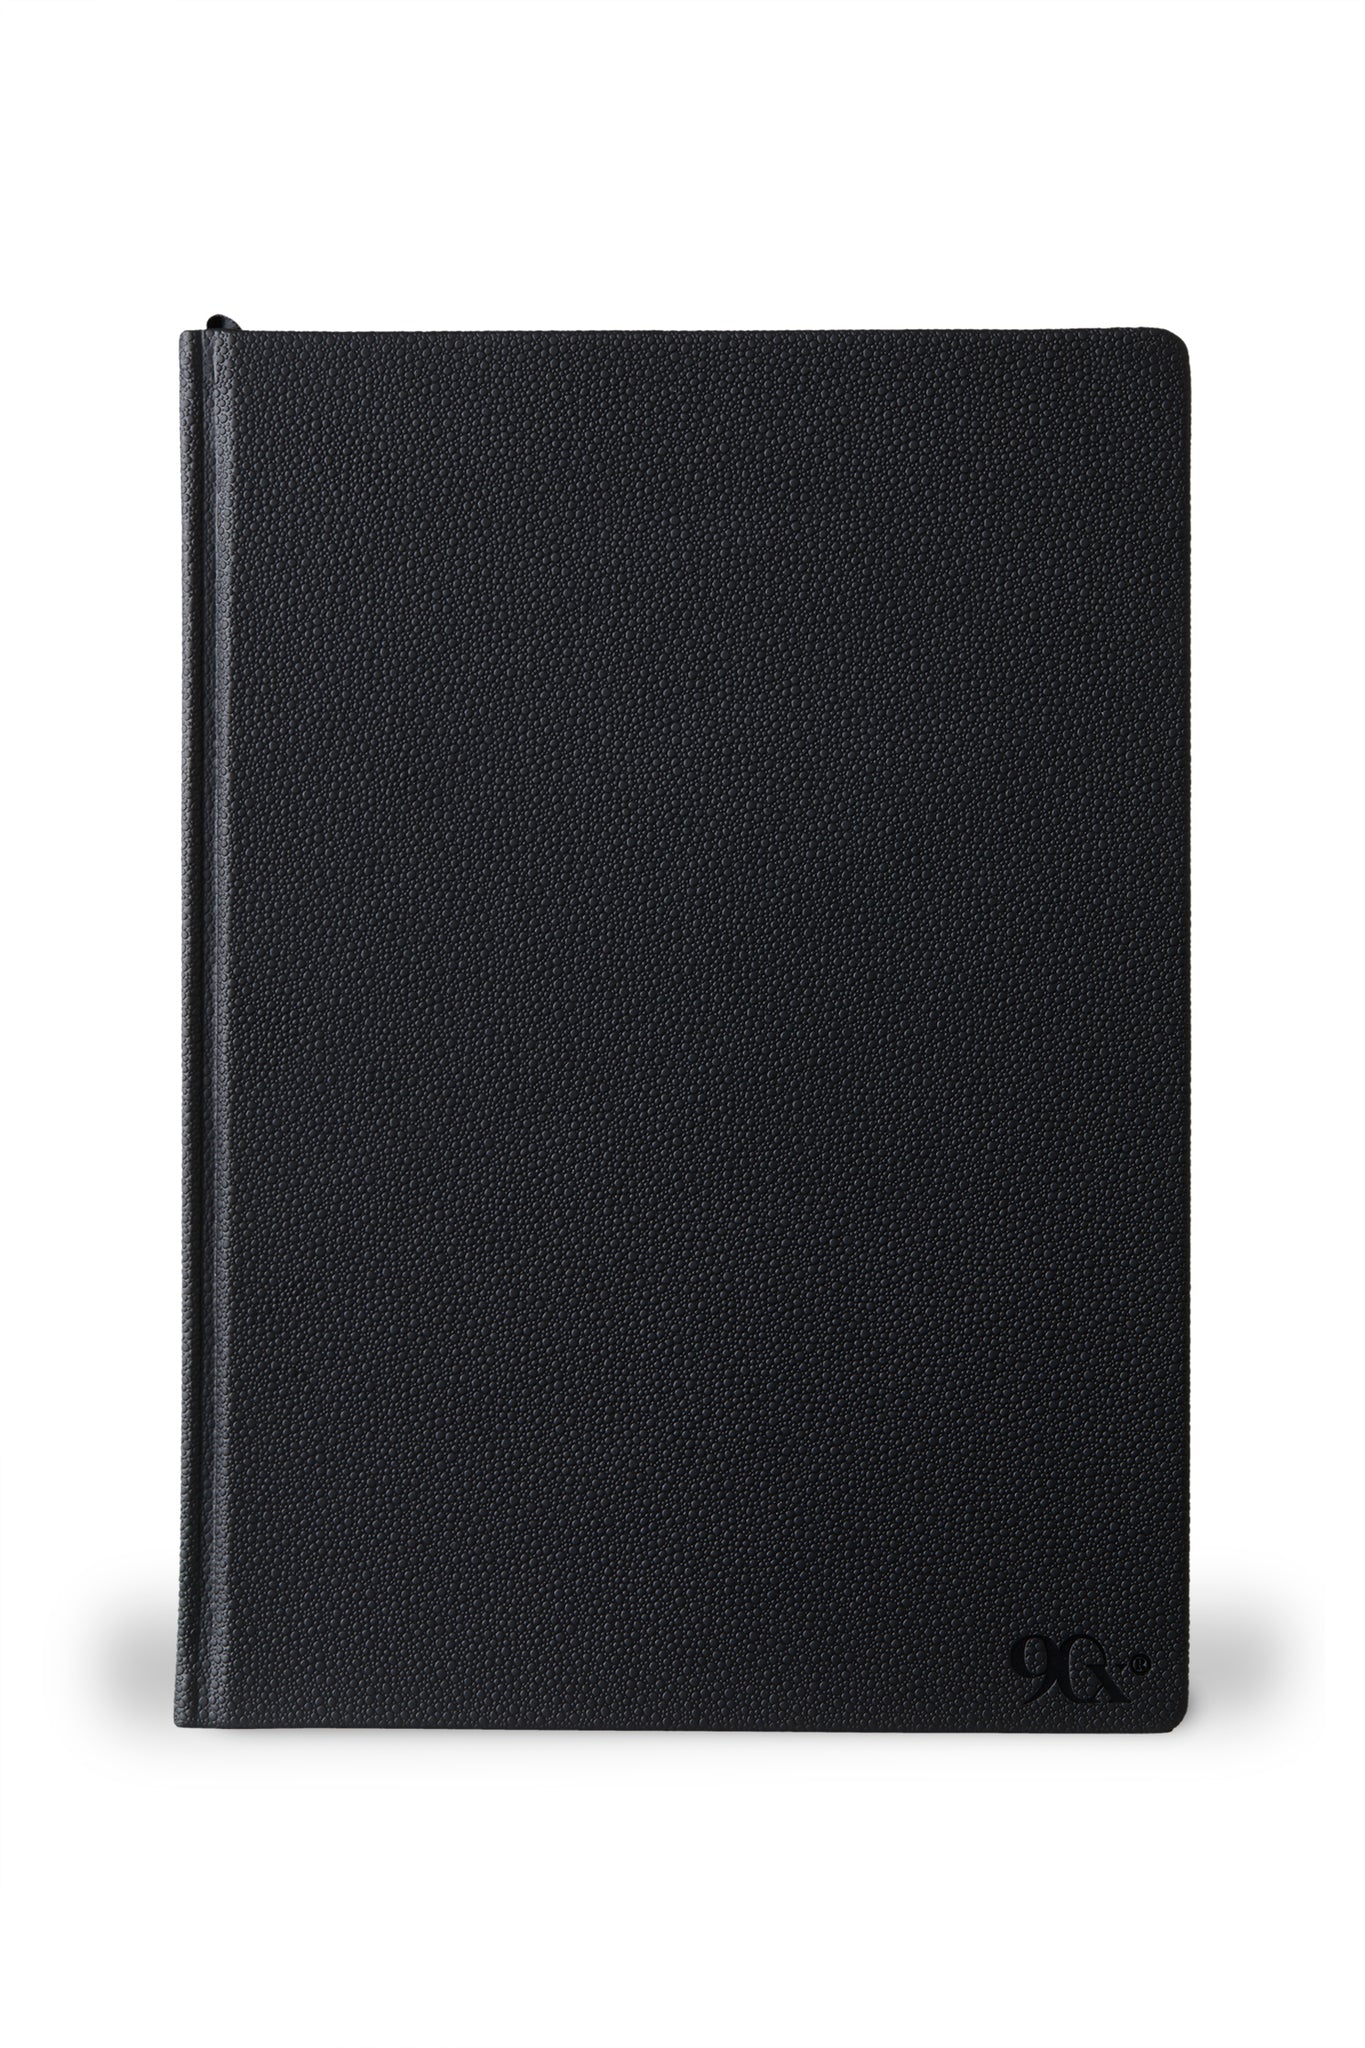 90X® Luxury Notebook